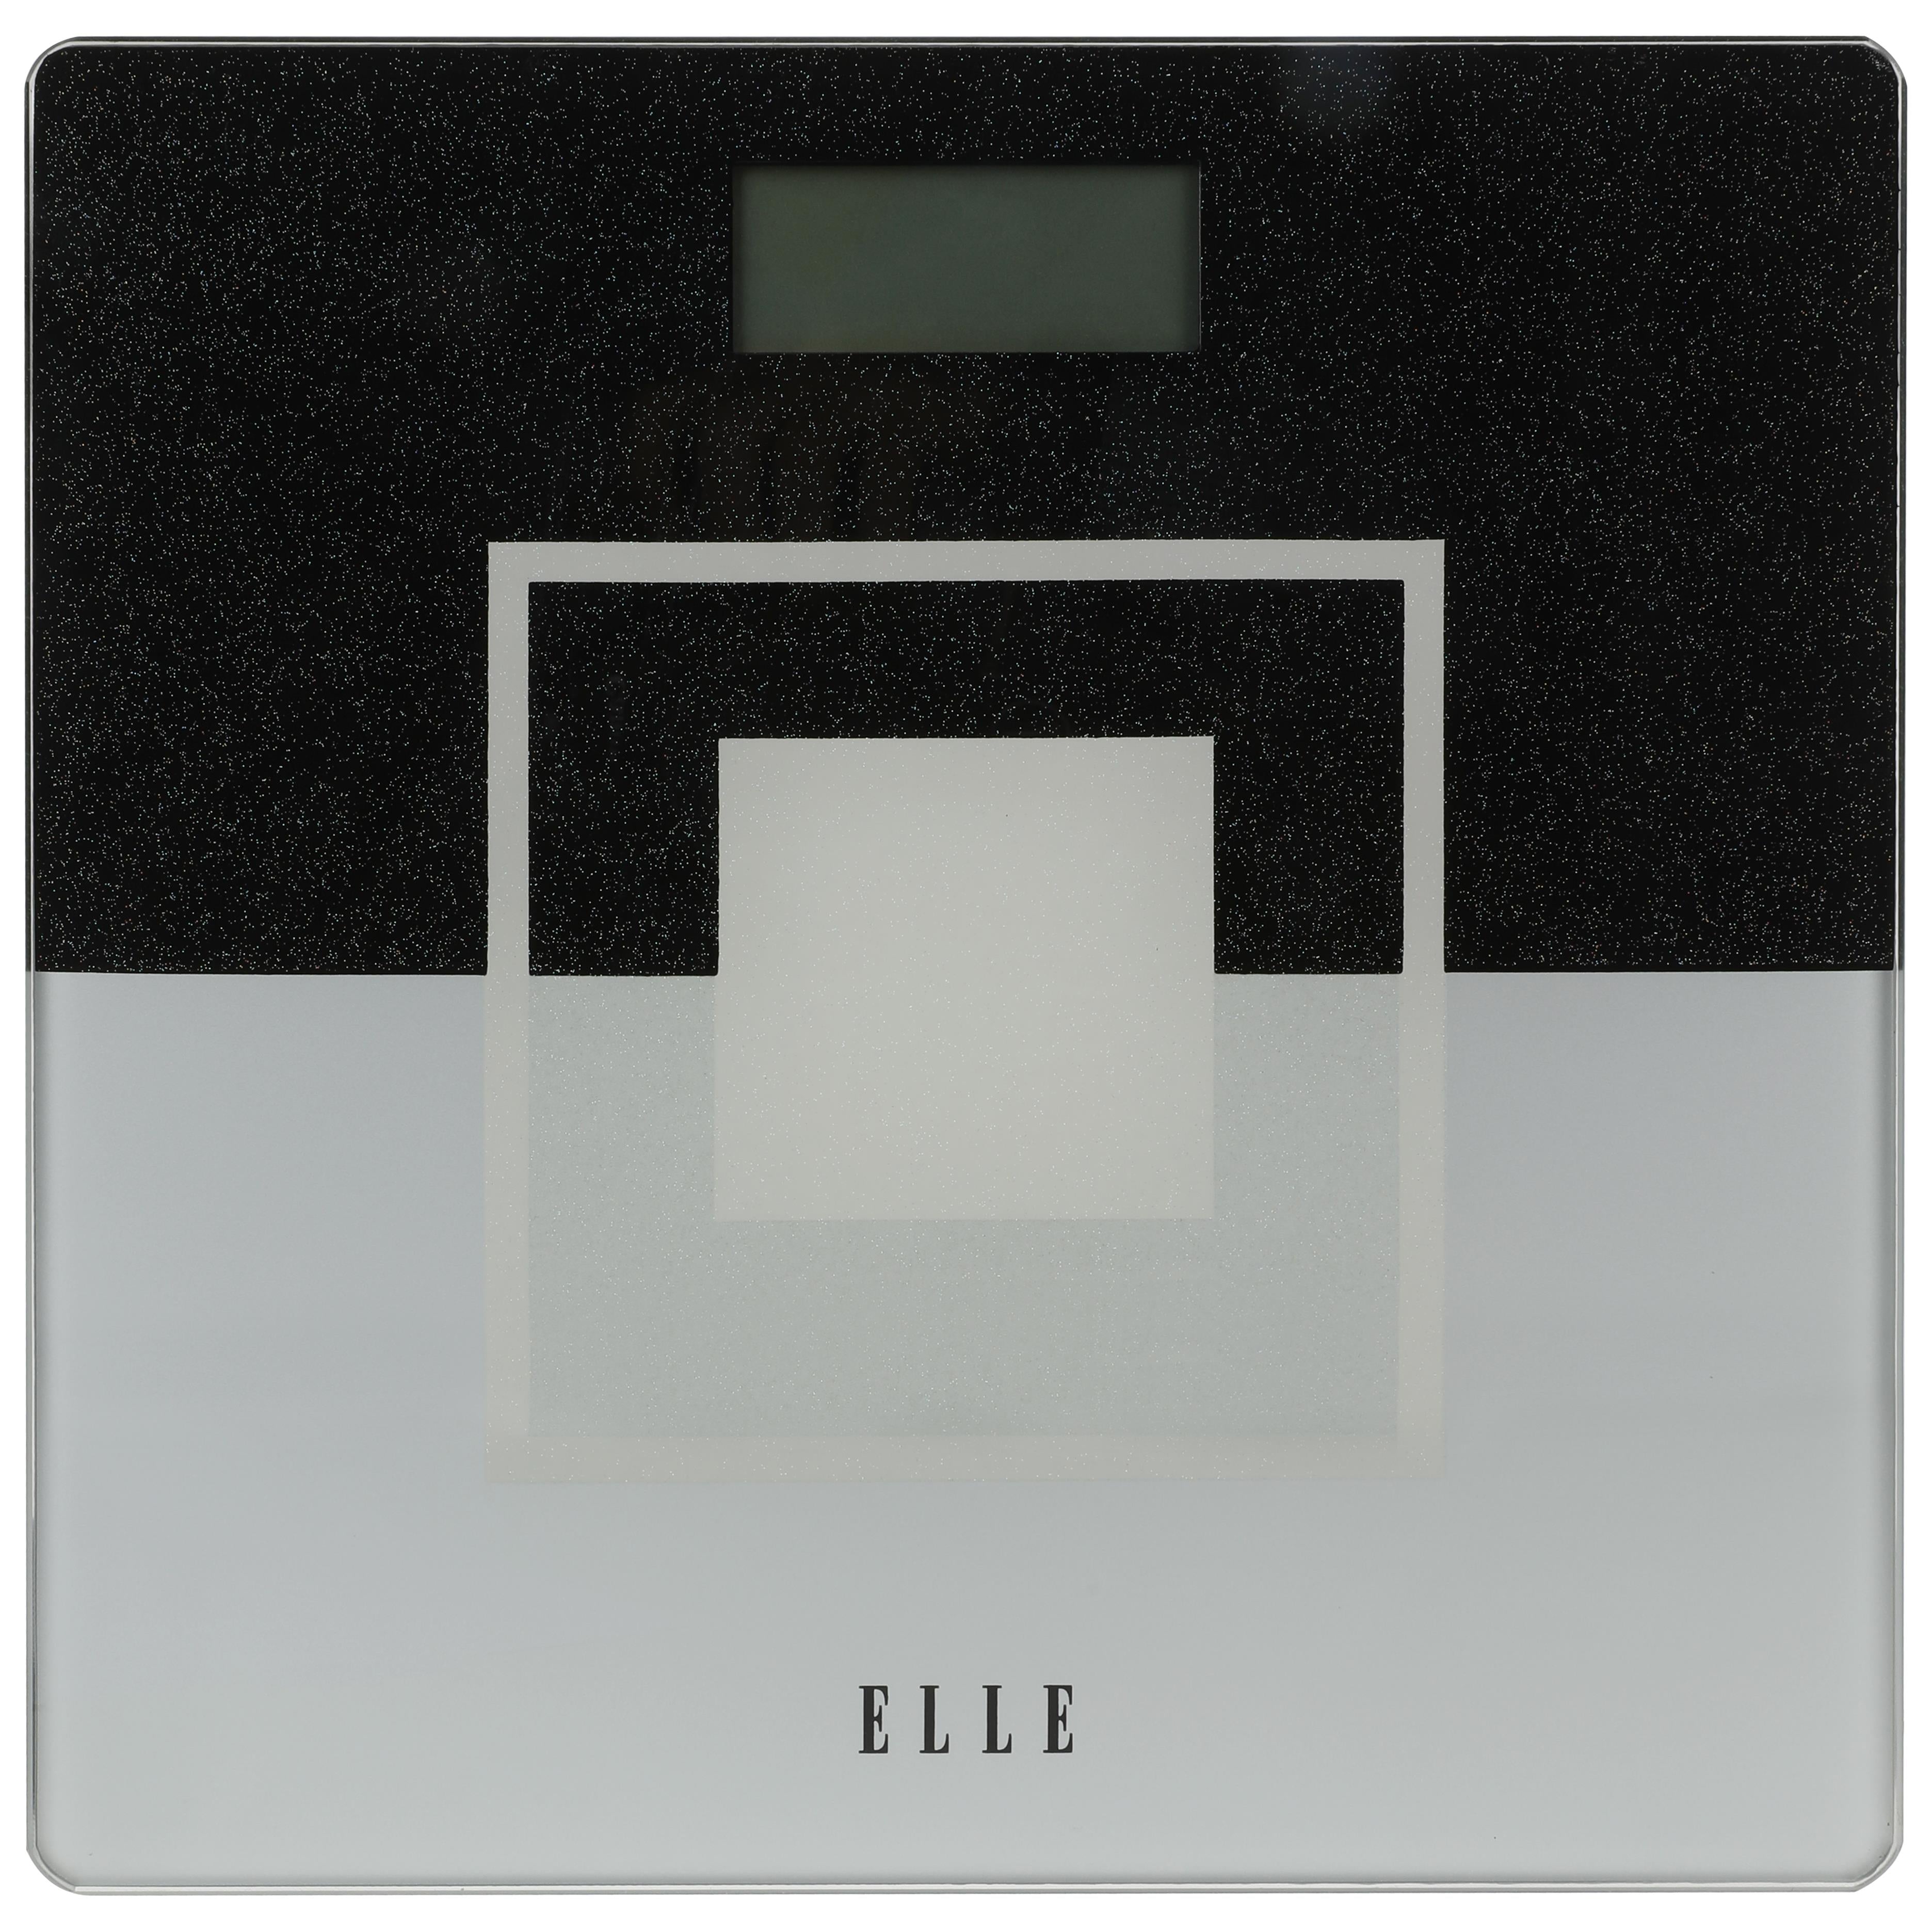 Elle Digital Bathroom Scale - Glitter White